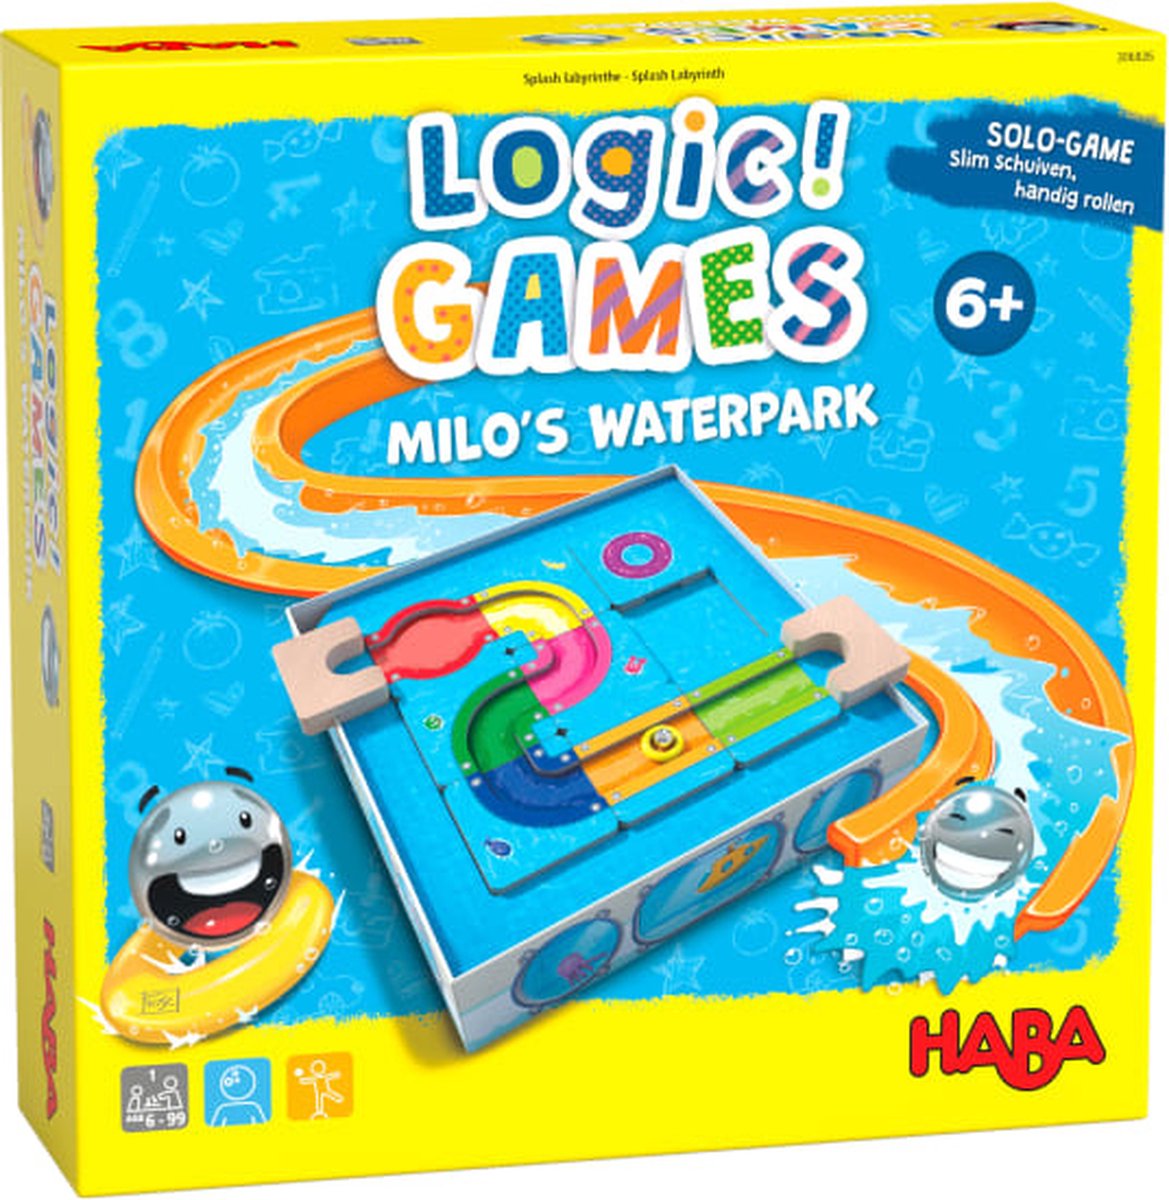 Logic! GAMES - Milos waterpark - Haba spel [6 jaar +]